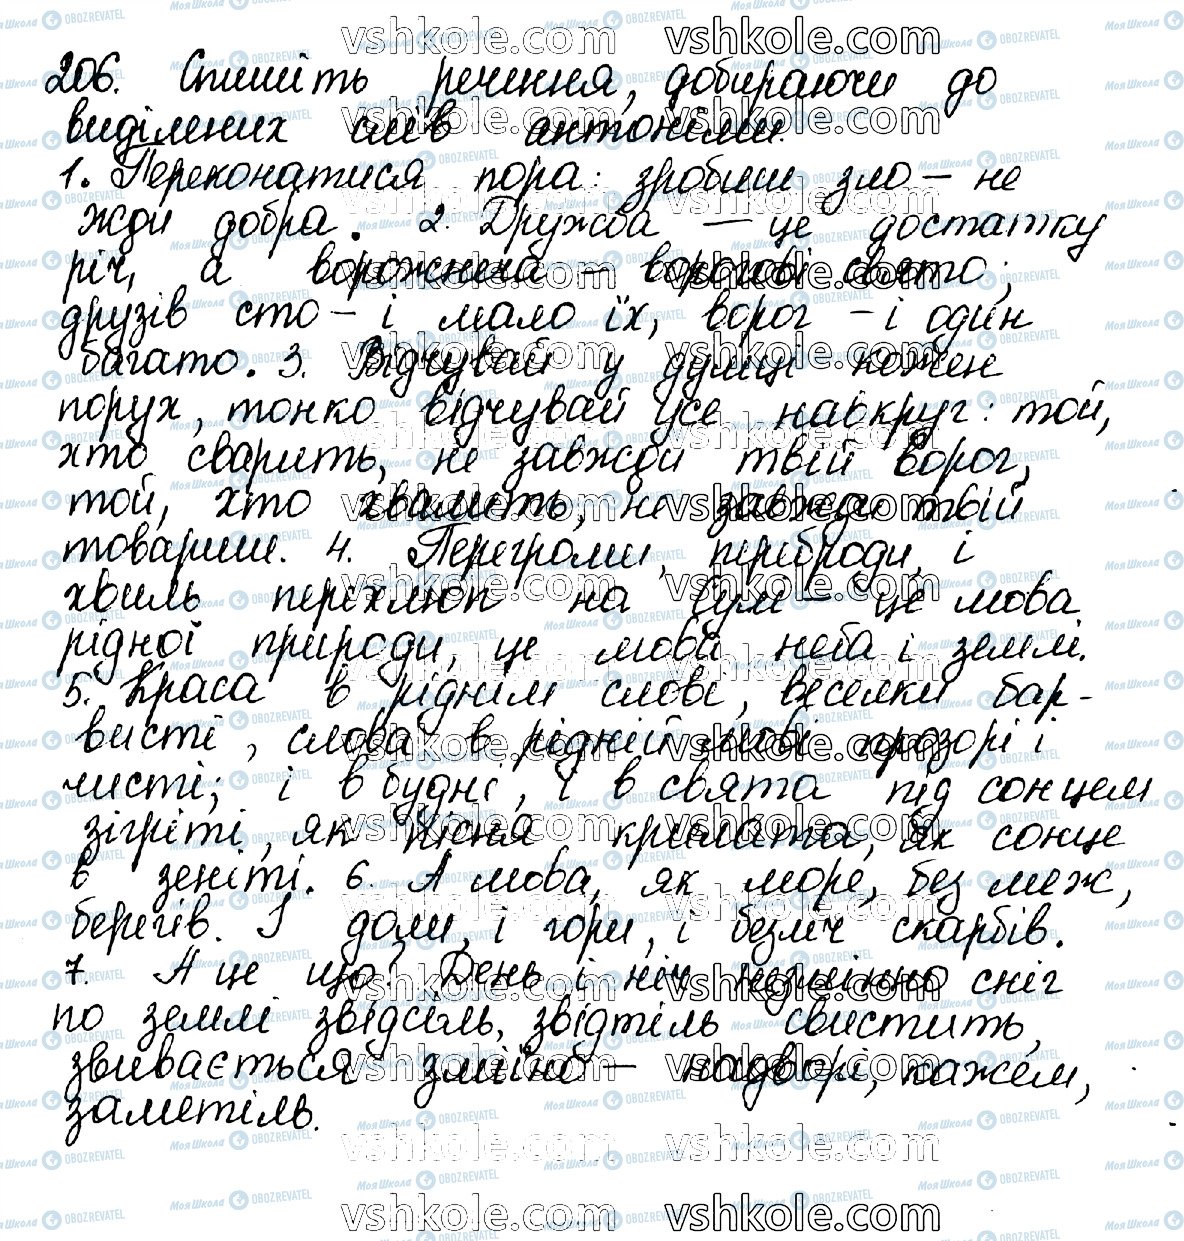 ГДЗ Укр мова 10 класс страница 206